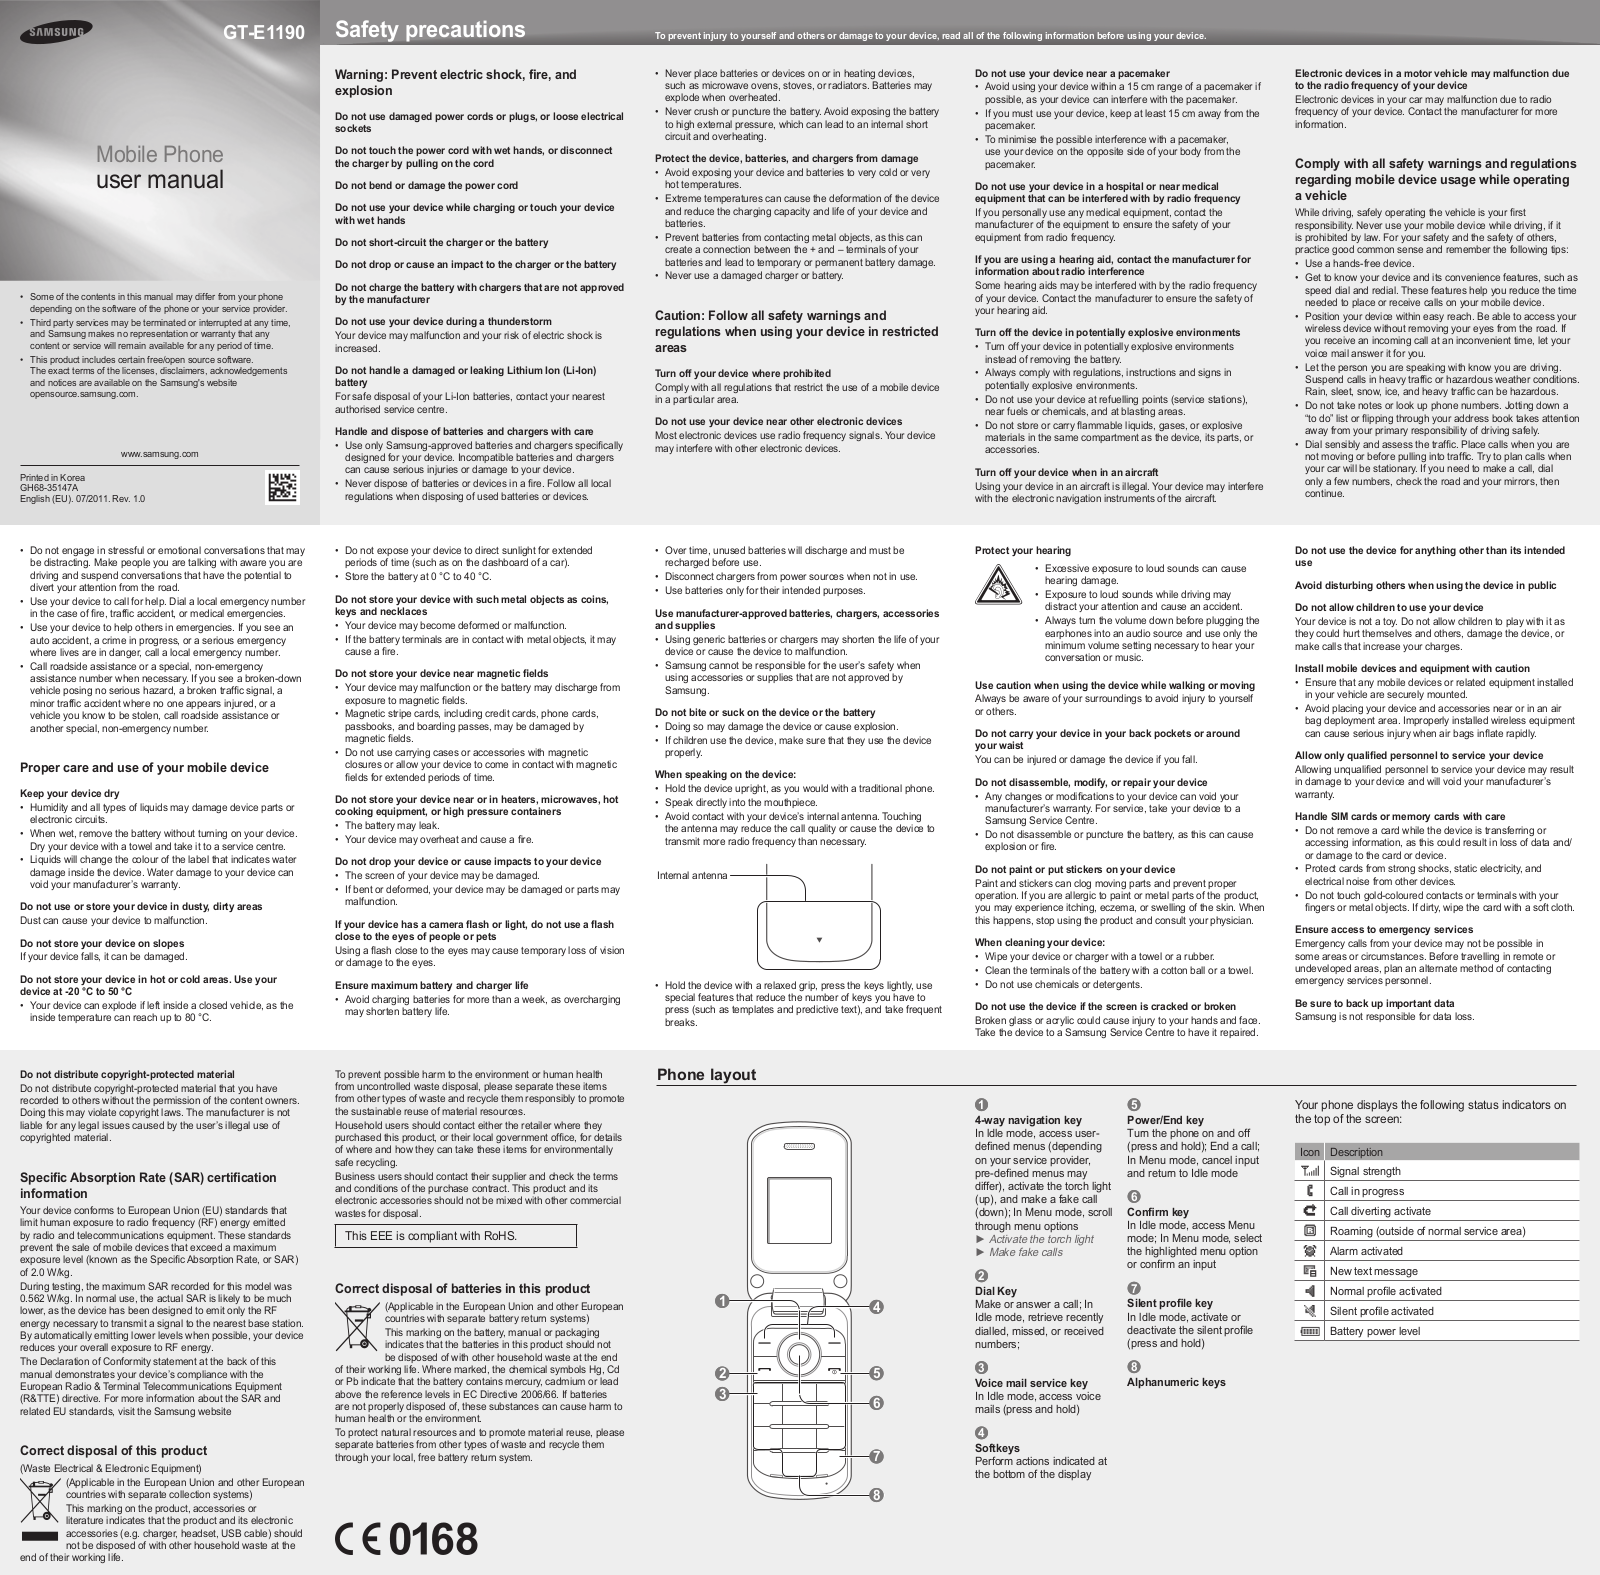 SAMSUNG E1190 User Manual